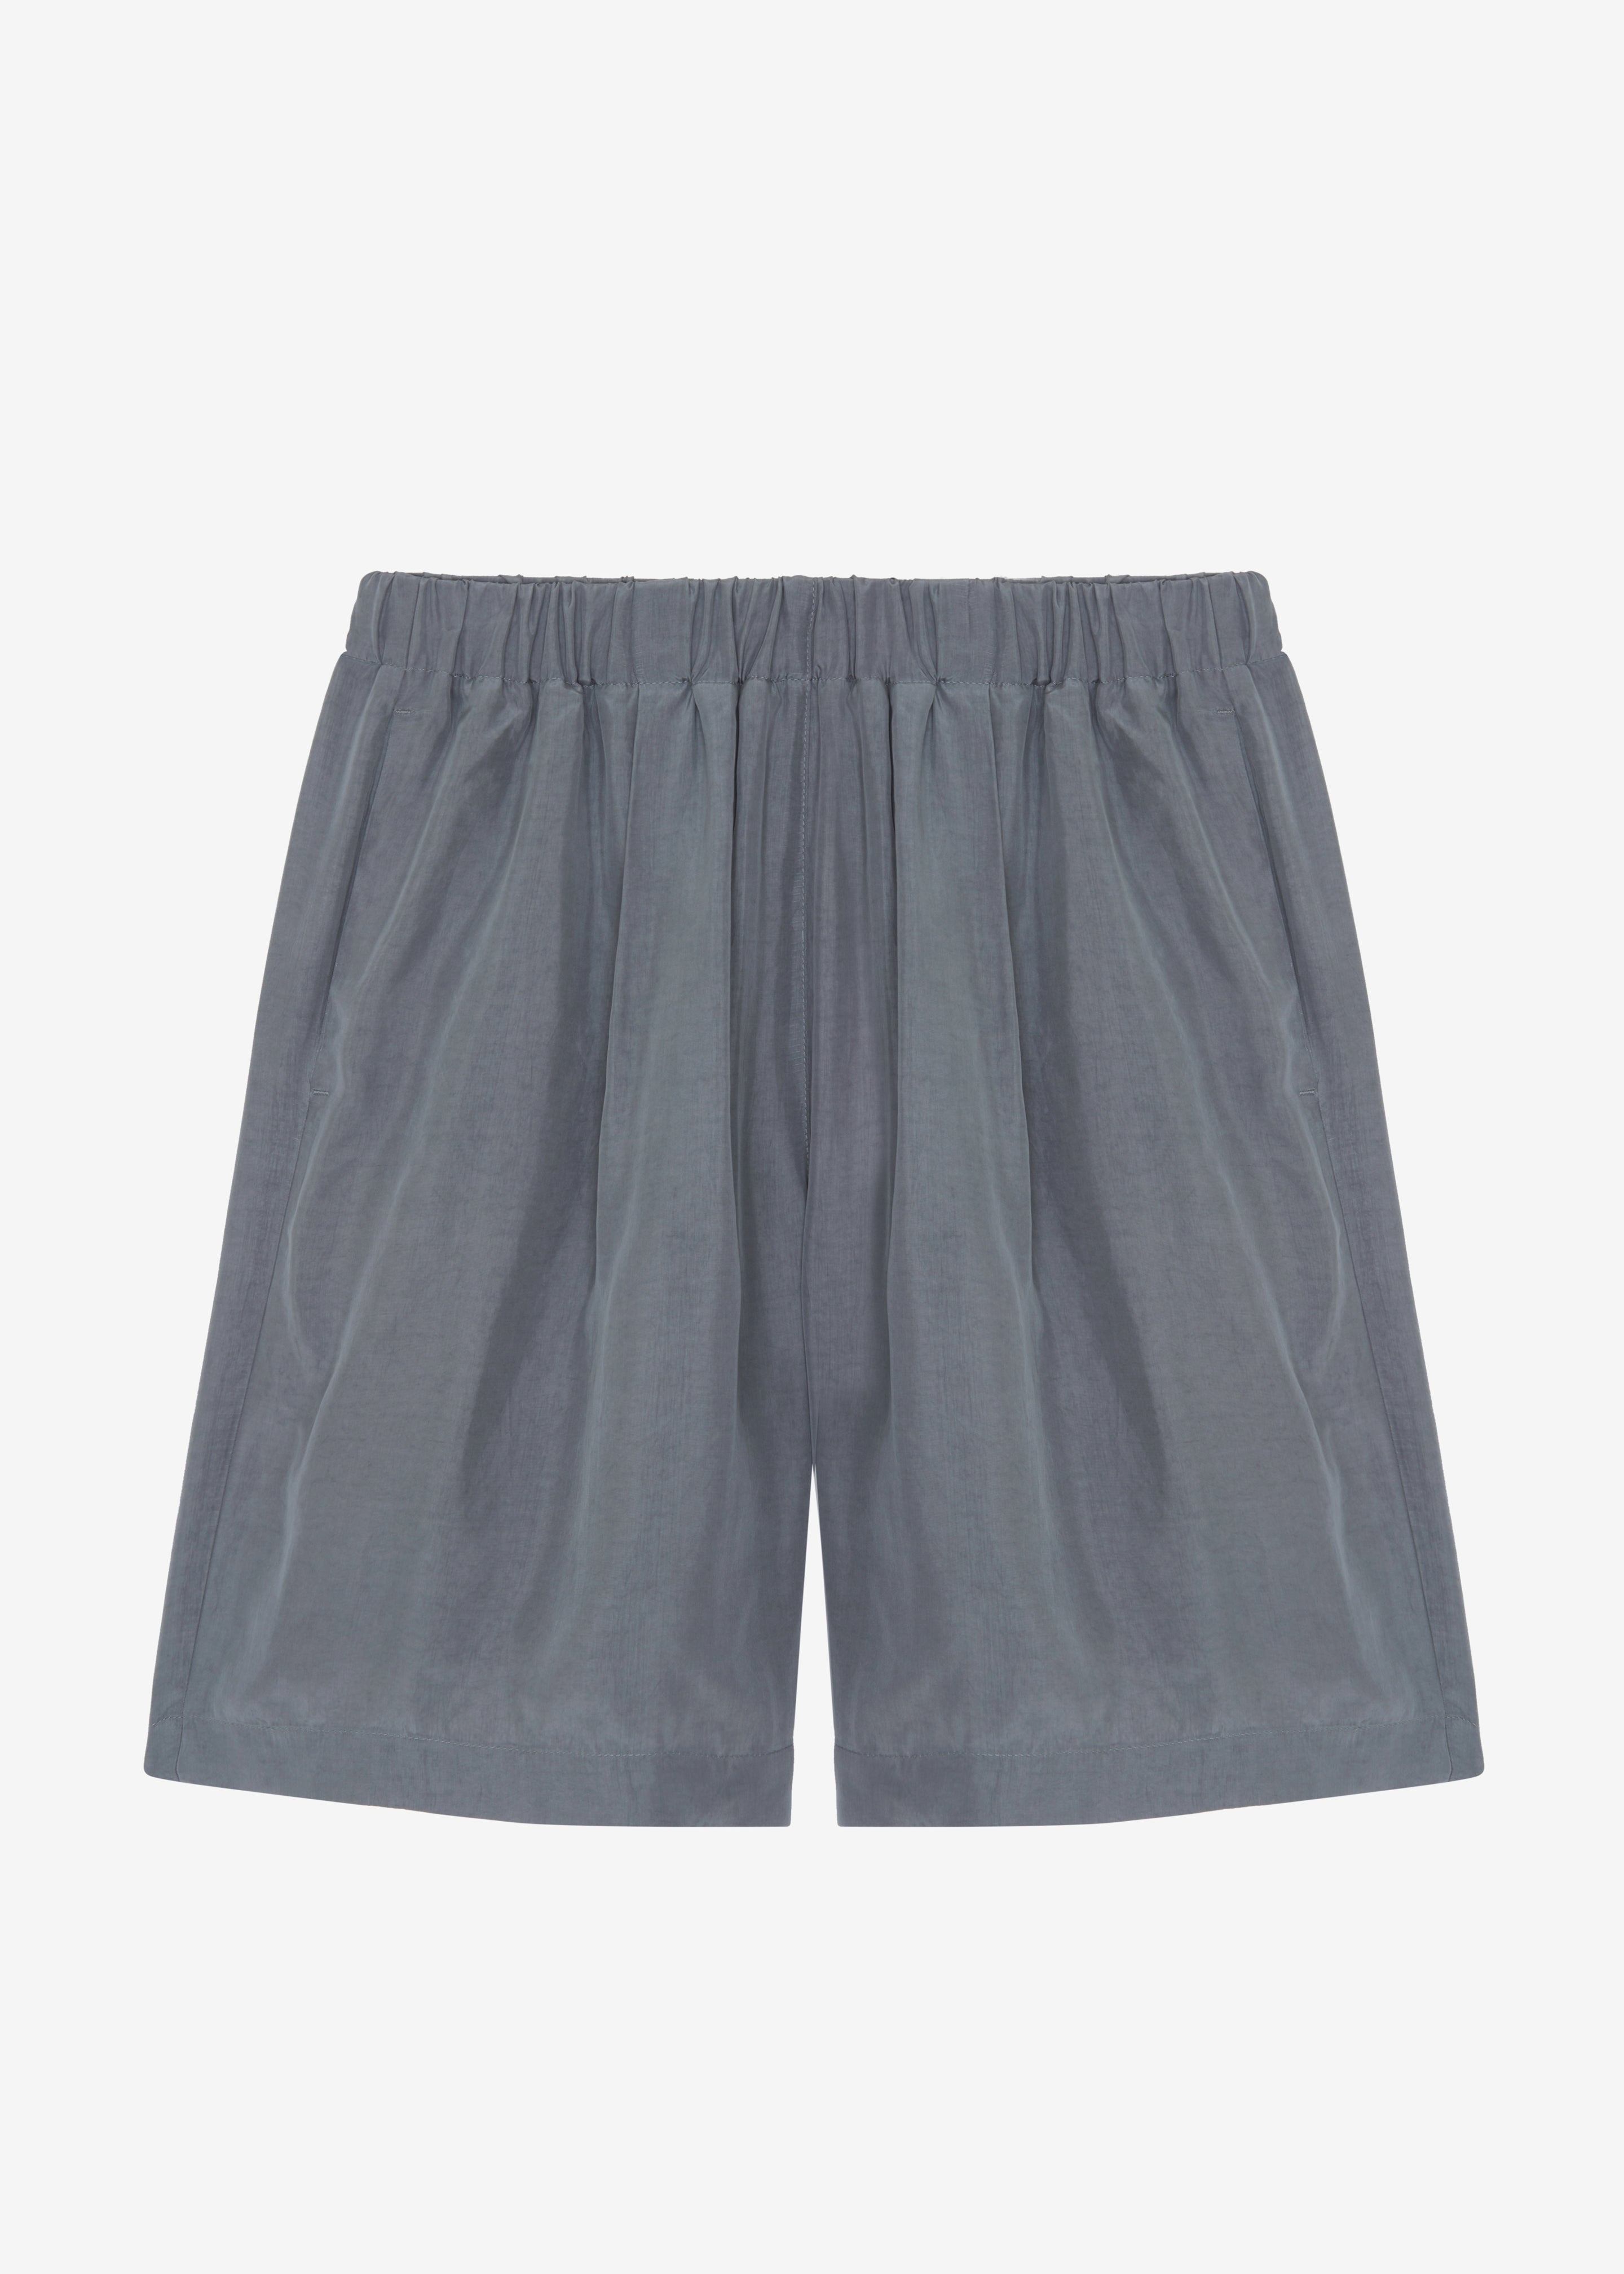 Leland Silky Boxer Shorts - Charcoal - 7